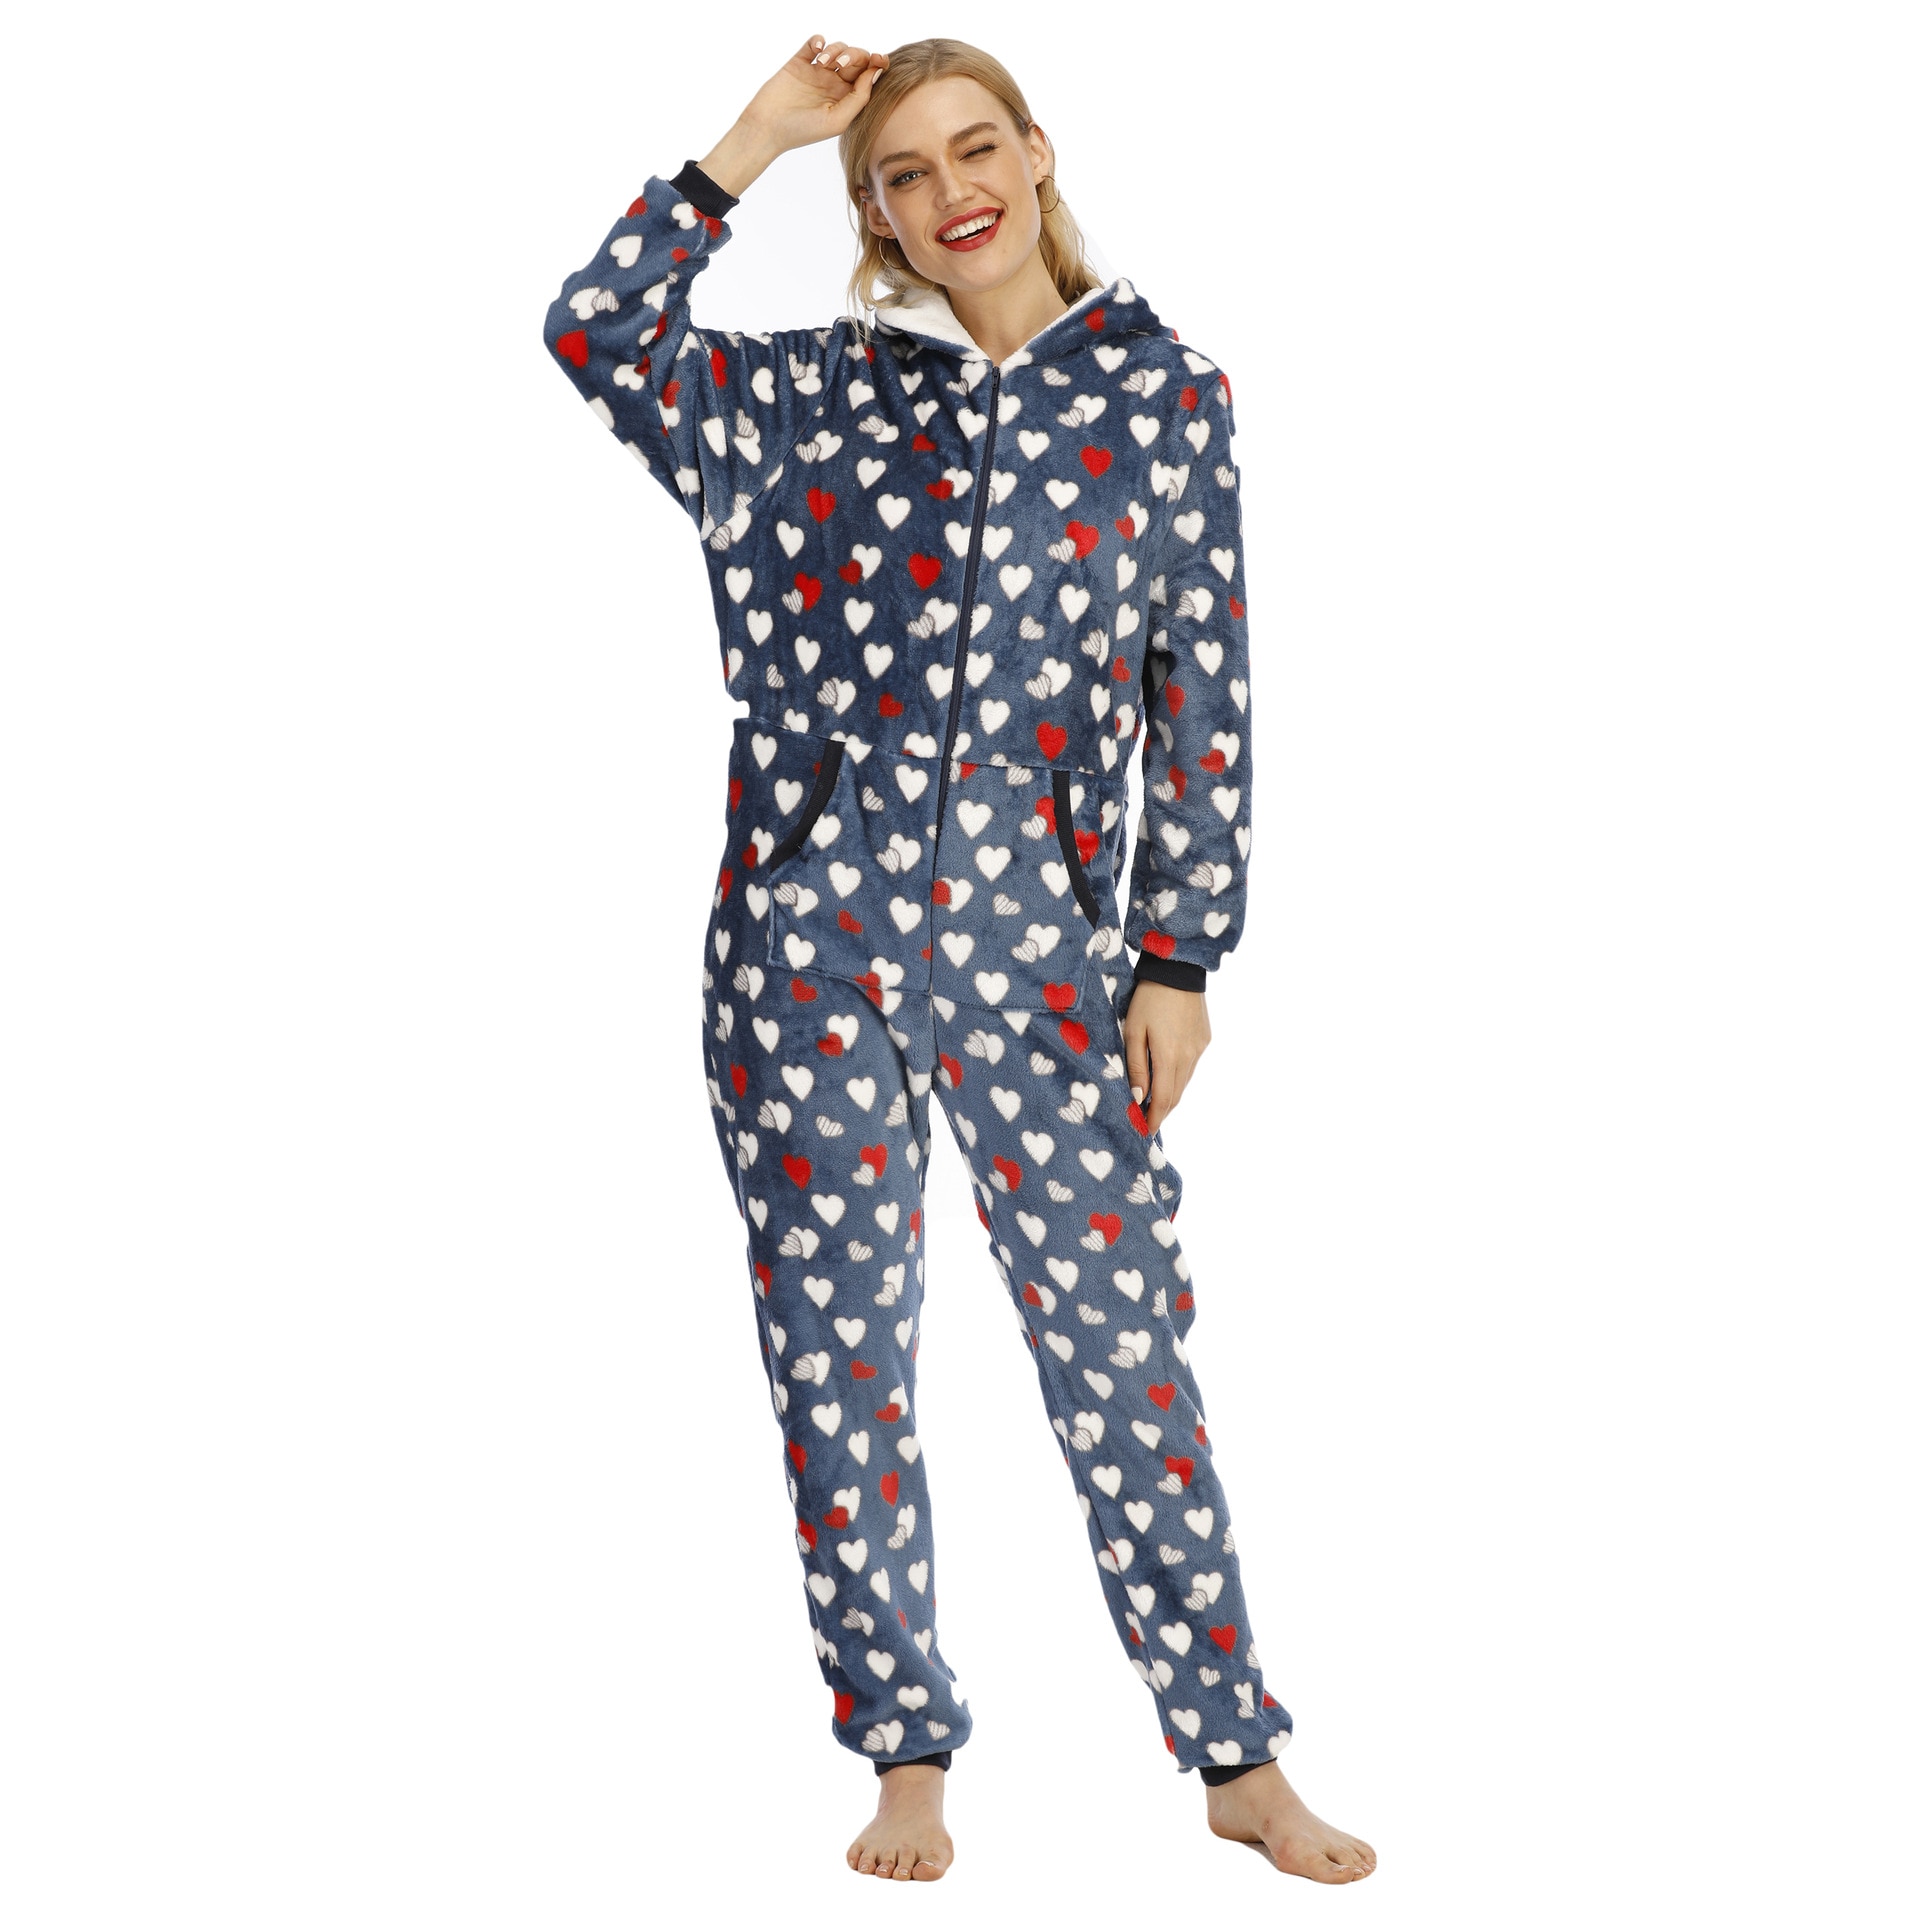 Flannel Women Pajamas Cute Ears Hooded Jumpsuit Plush Onesie Sleepwear Love Print Nightwear Zipper Full Sleeve Romper Nightgown